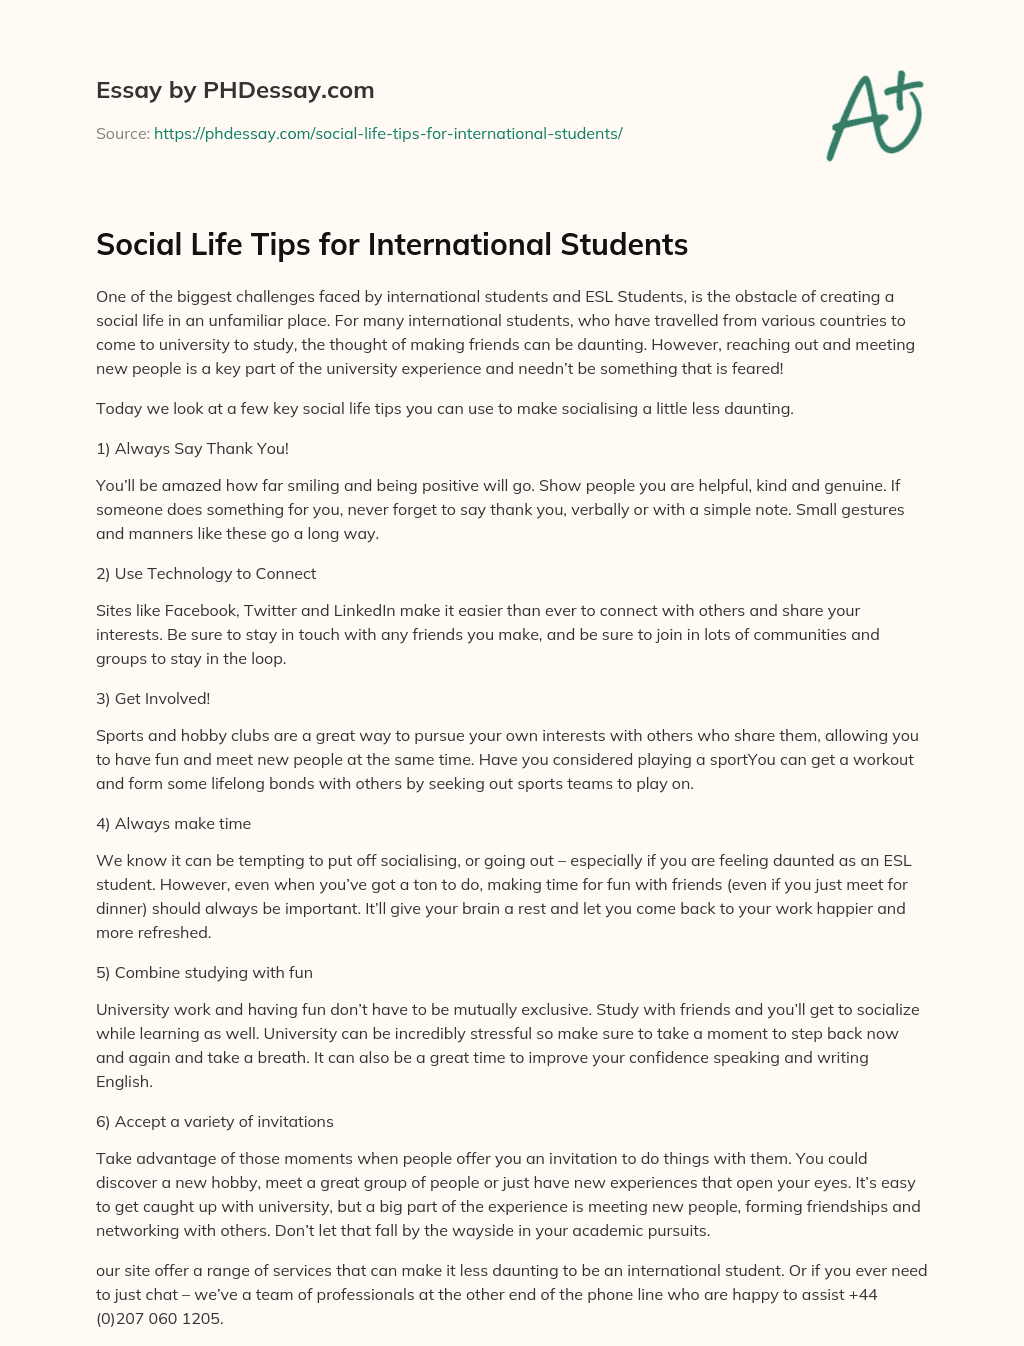 Social Life Tips for International Students essay